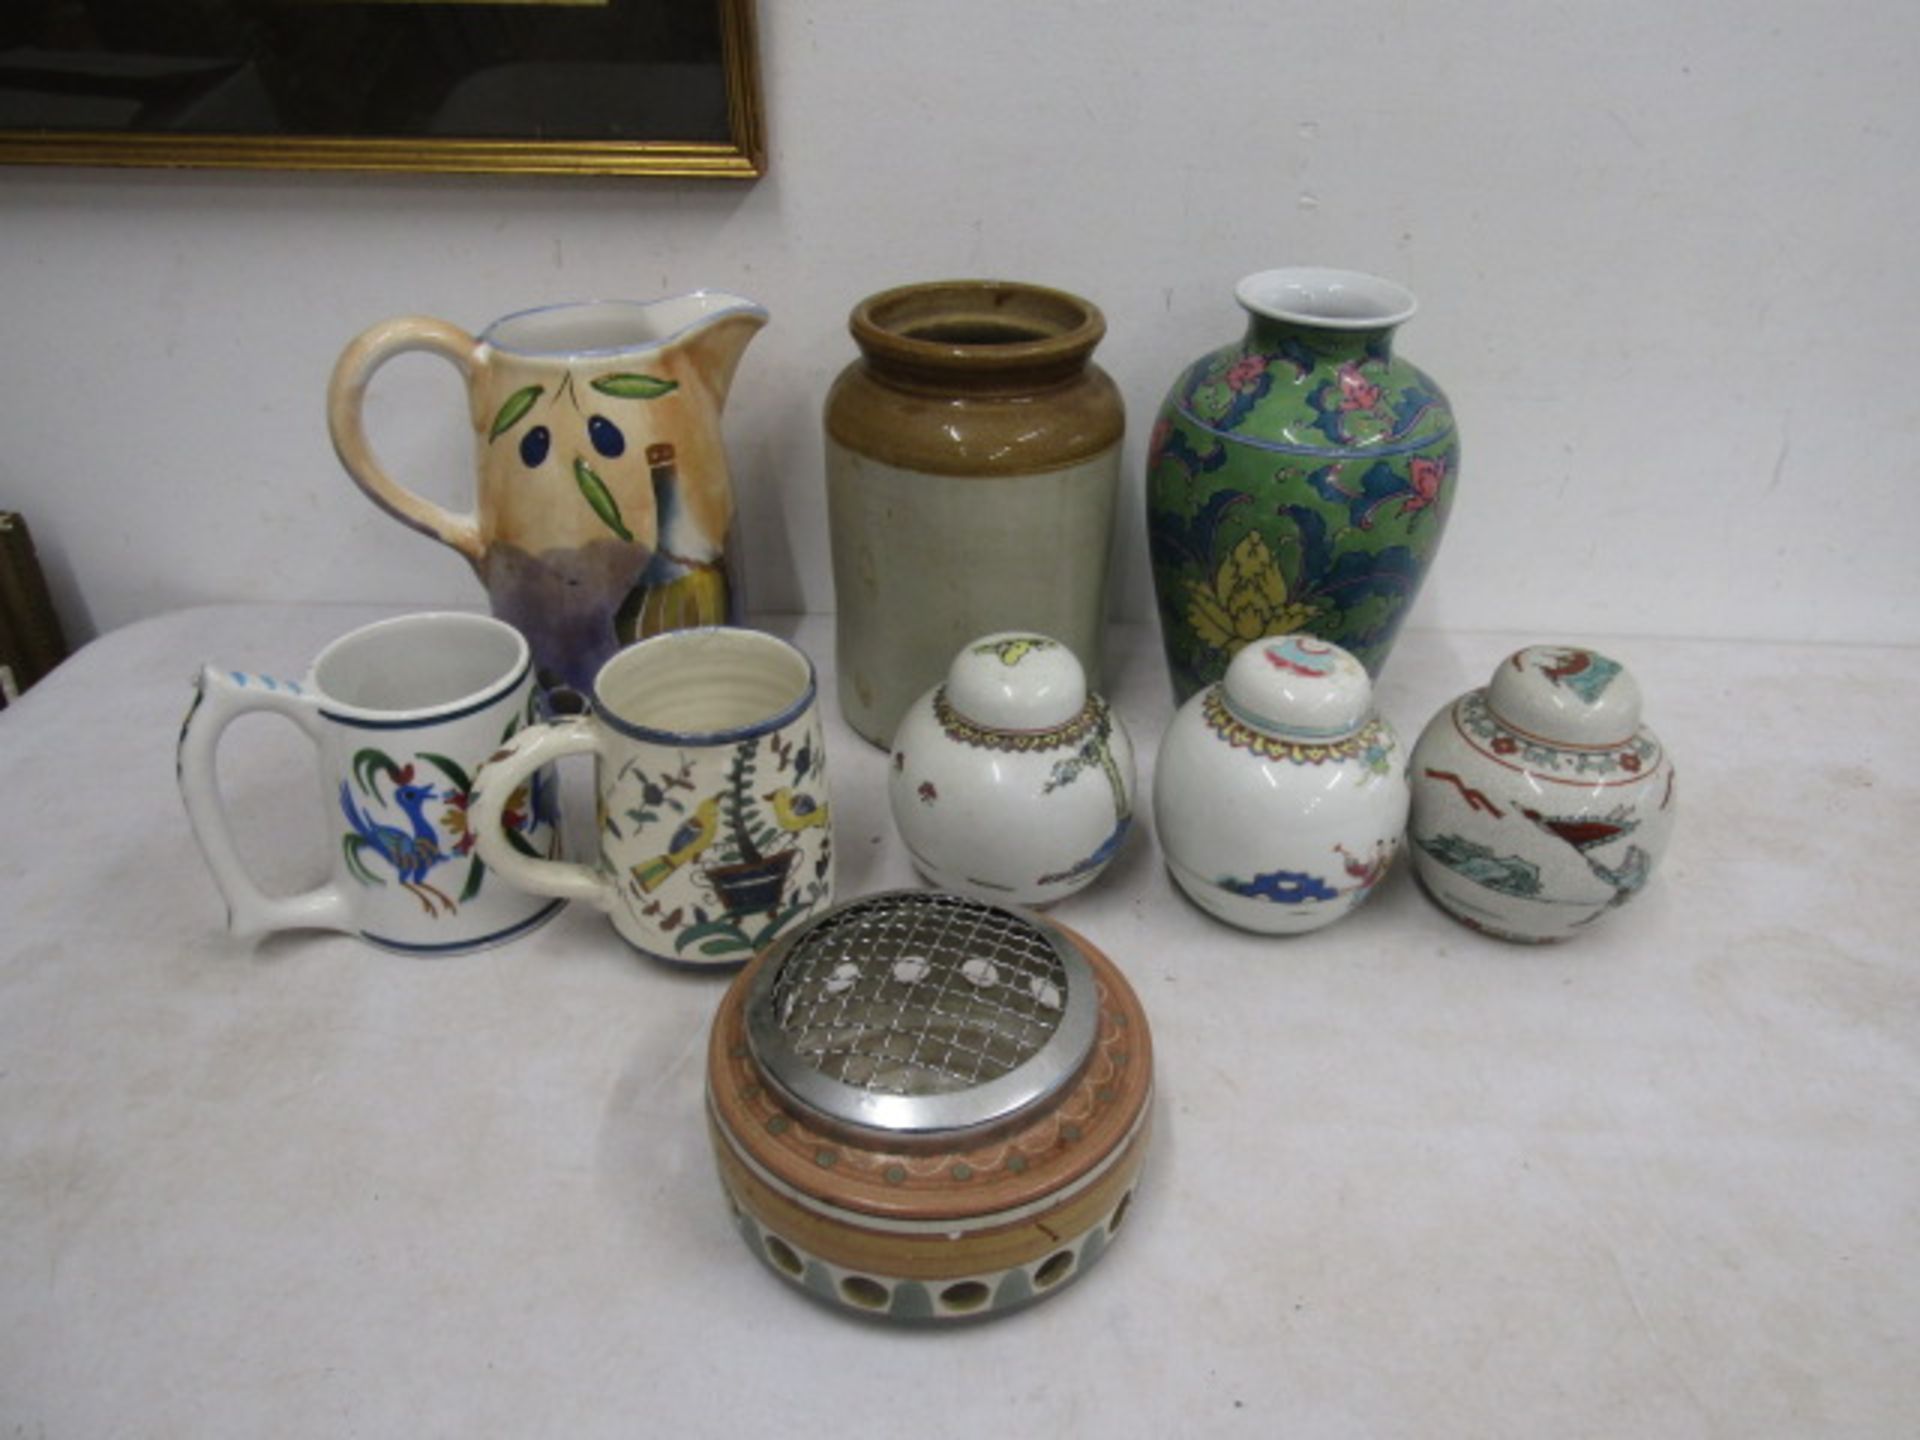 Palestine mug Chinese ginger jars and various jugs/ceramics